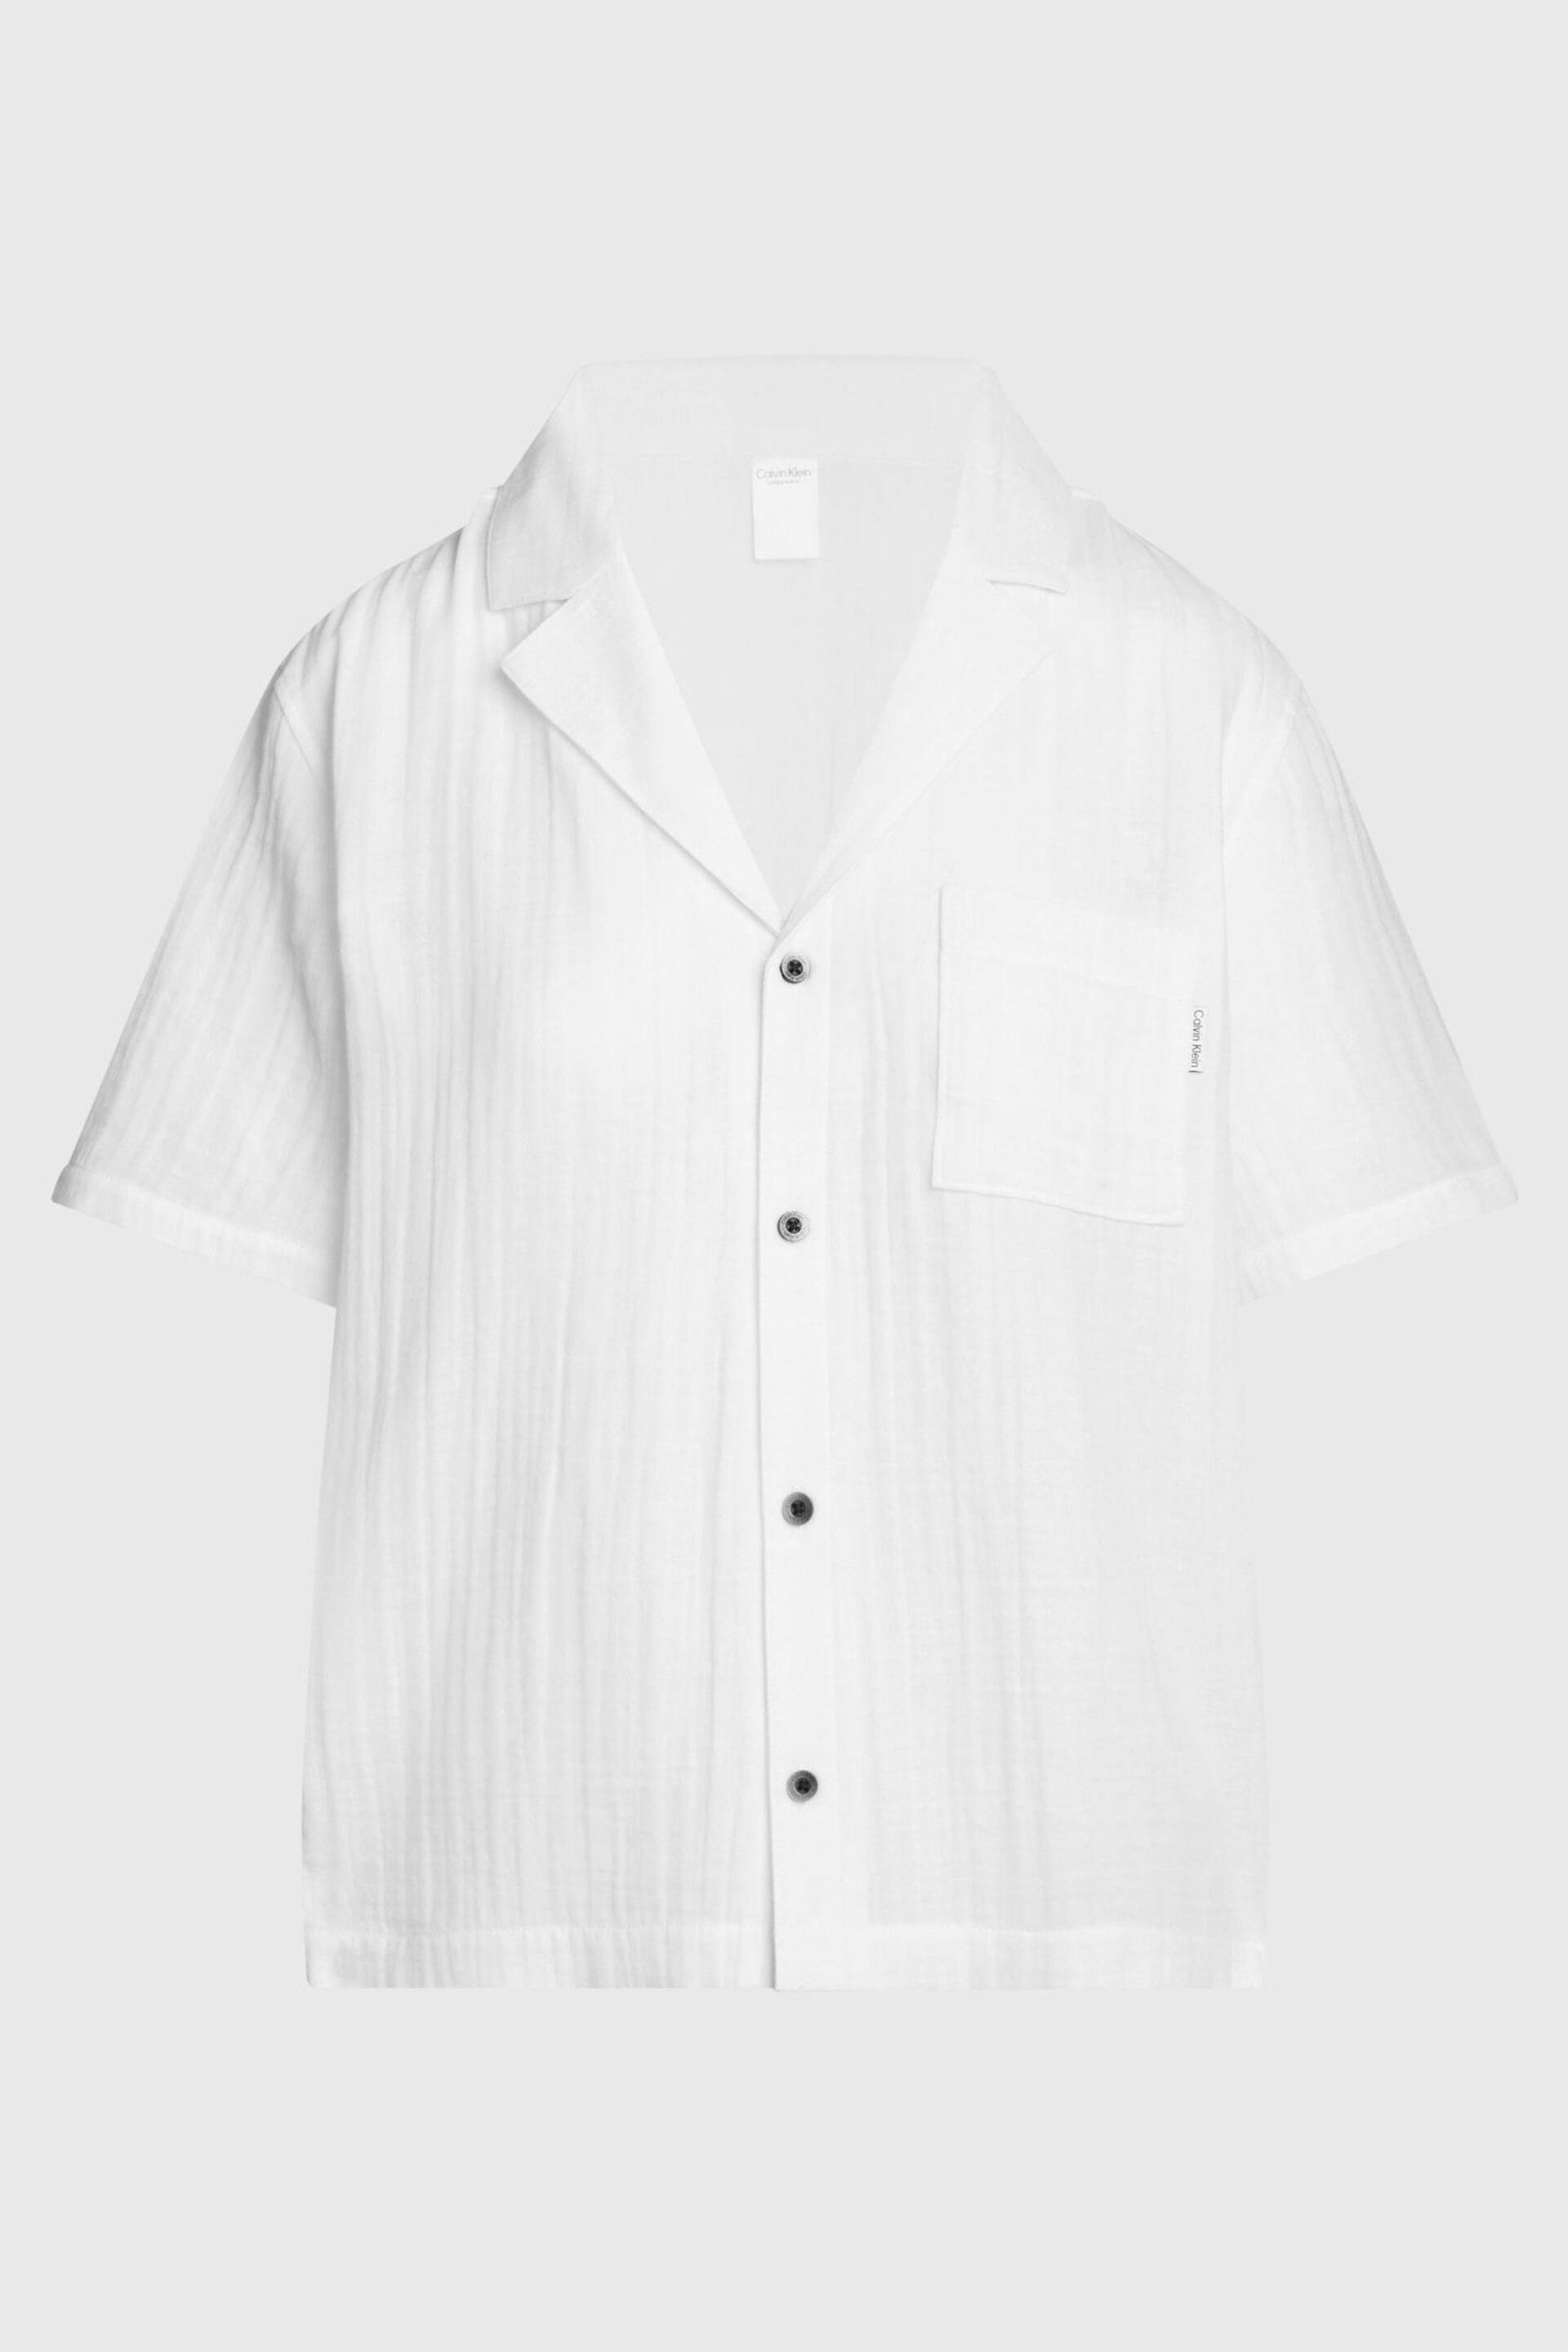 Calvin Klein White Short Sleeve Button Down Shirt - Image 4 of 4